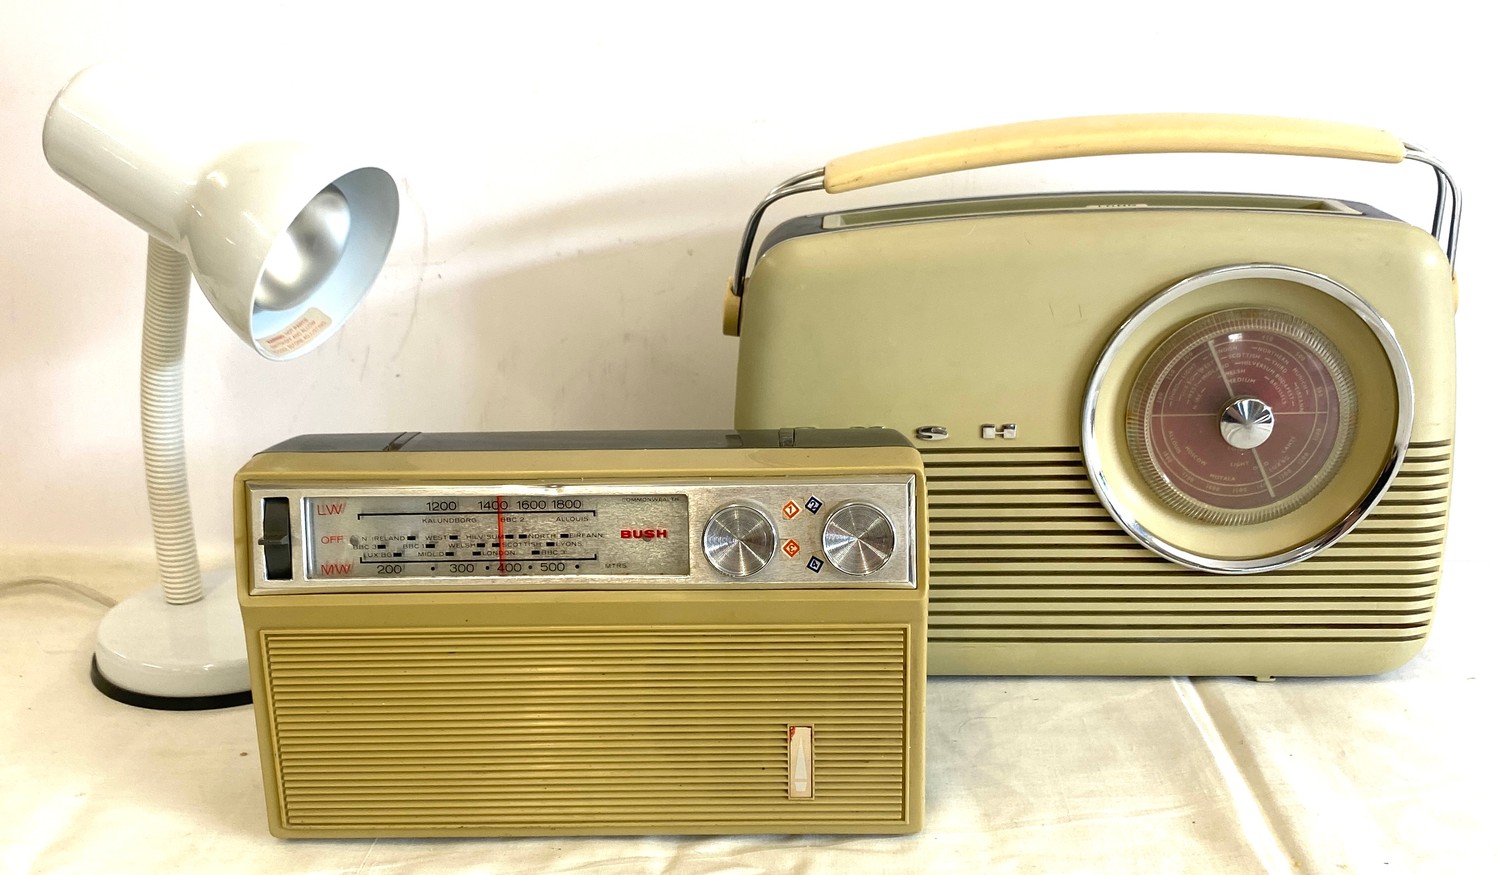 2 Vintage bush radios and a desk lamp - Untested